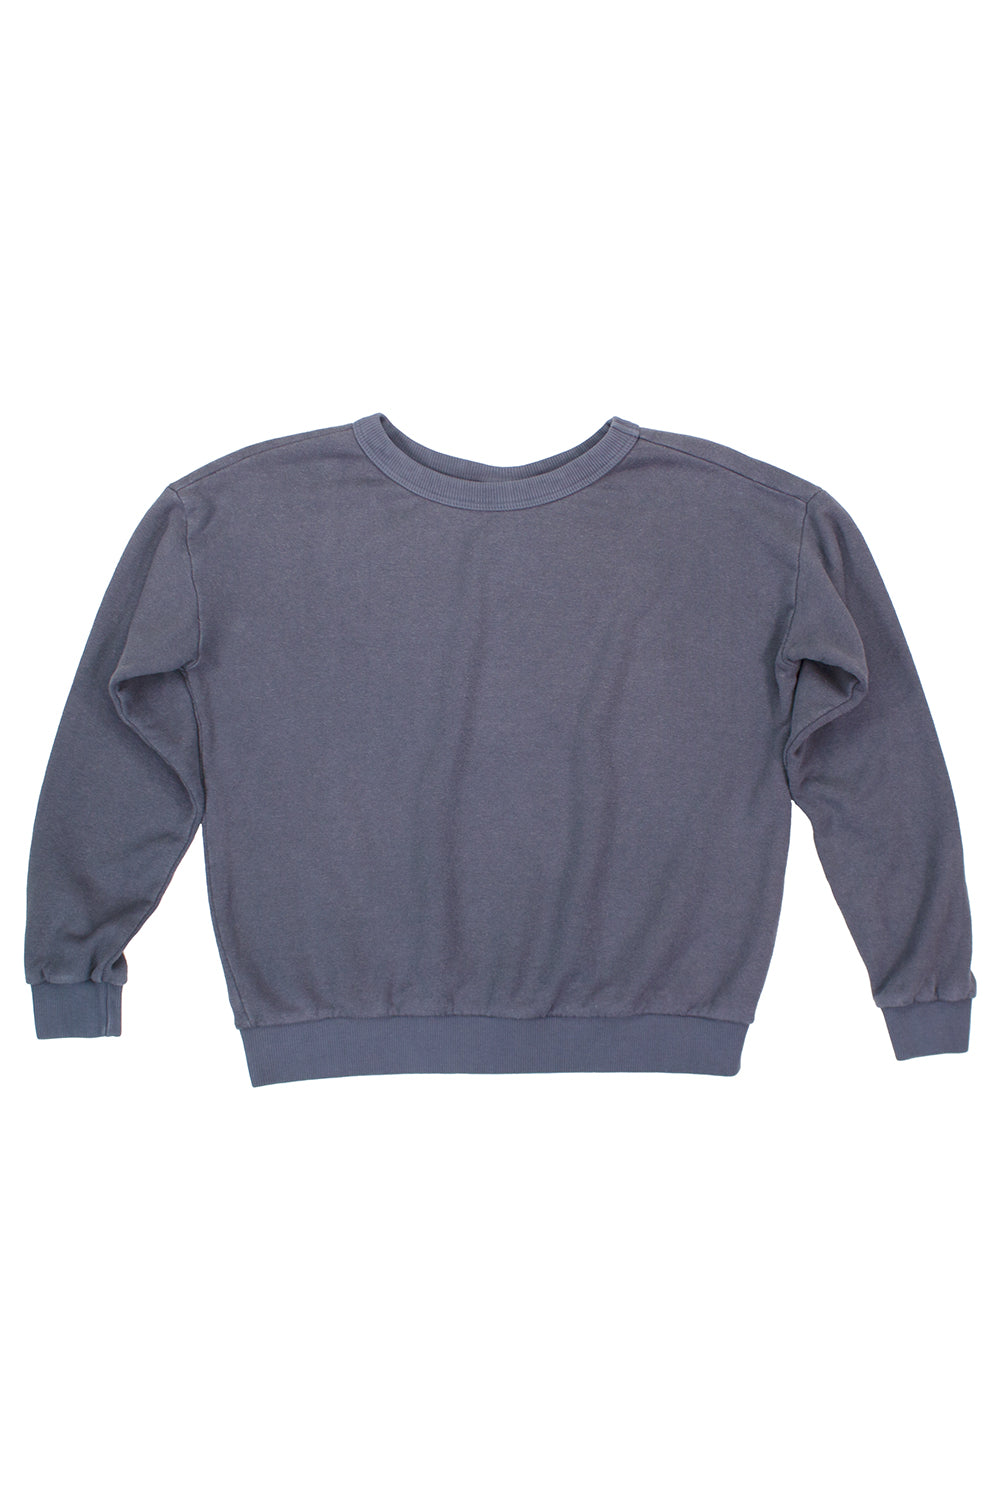 Laguna Cropped Sweatshirt | Jungmaven Hemp Clothing & Accessories / Color: Diesel Gray